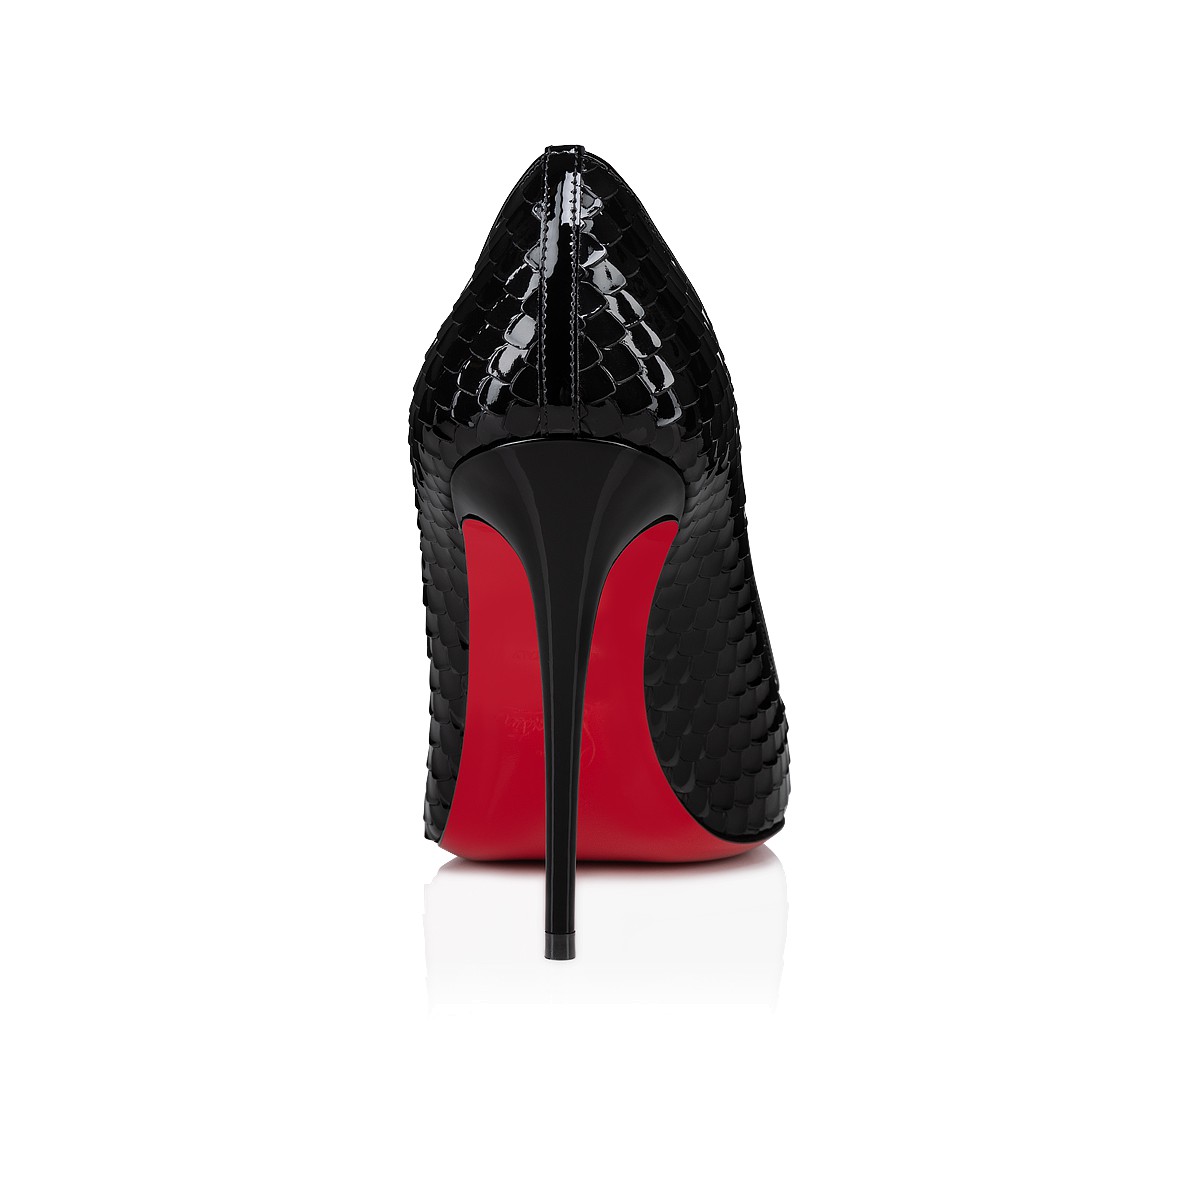 Kate 100 Black Patent calf leather - Women Shoes - Christian Louboutin